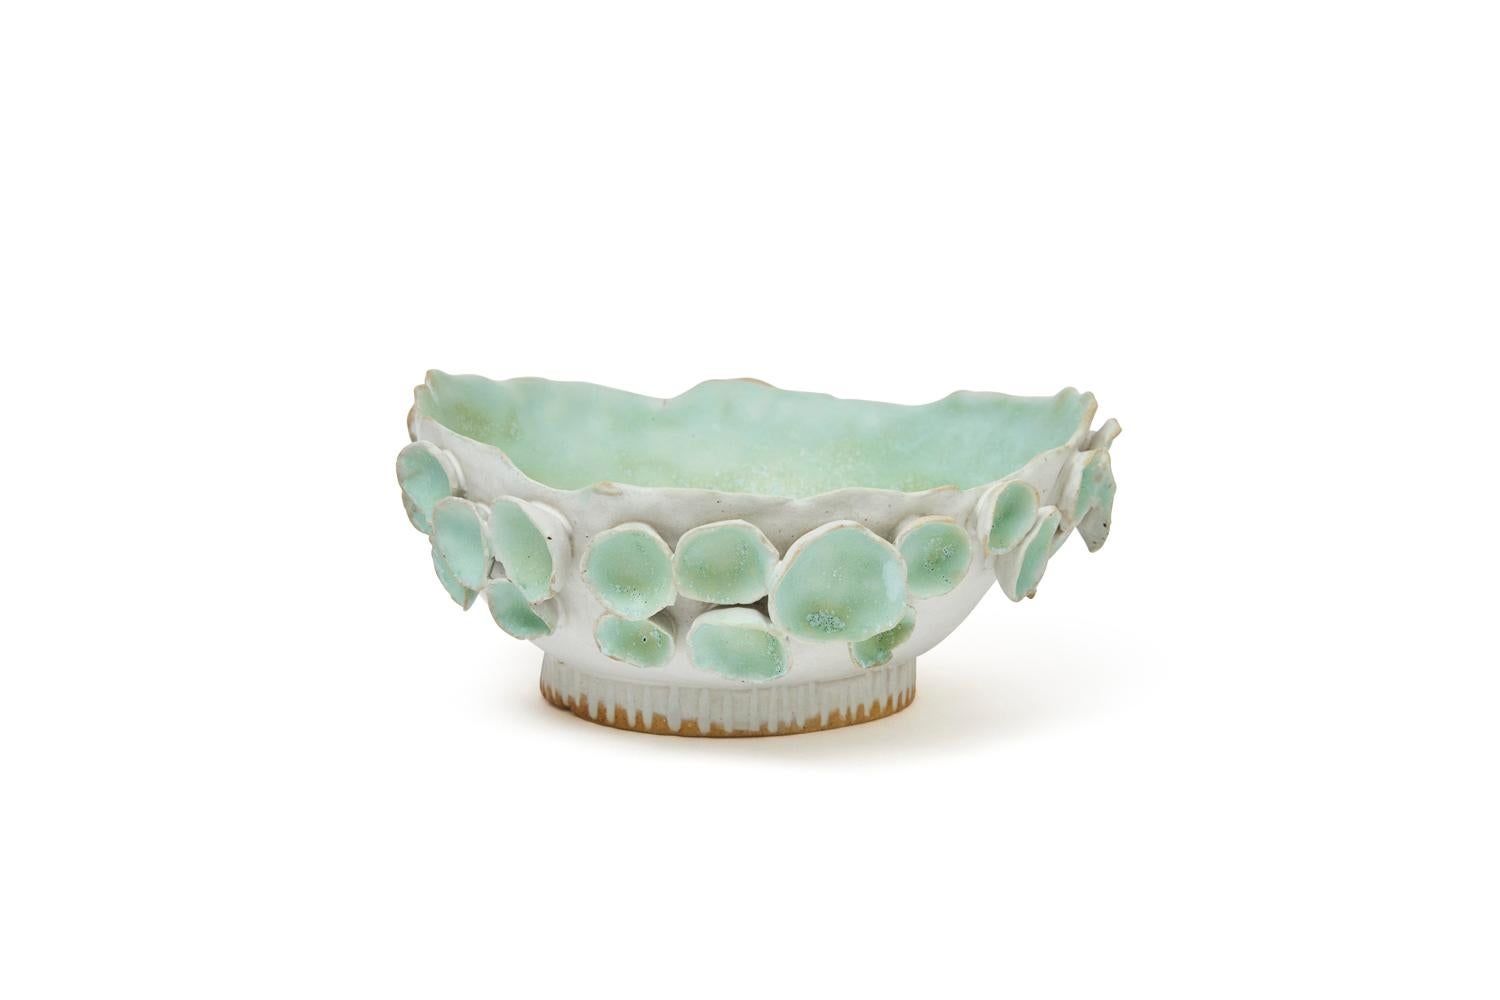 Trish DeMasi
Schneeballen white bowl, 2021
Glazed ceramic
Measures: 3.75 x 9.25 x 8.75.
 